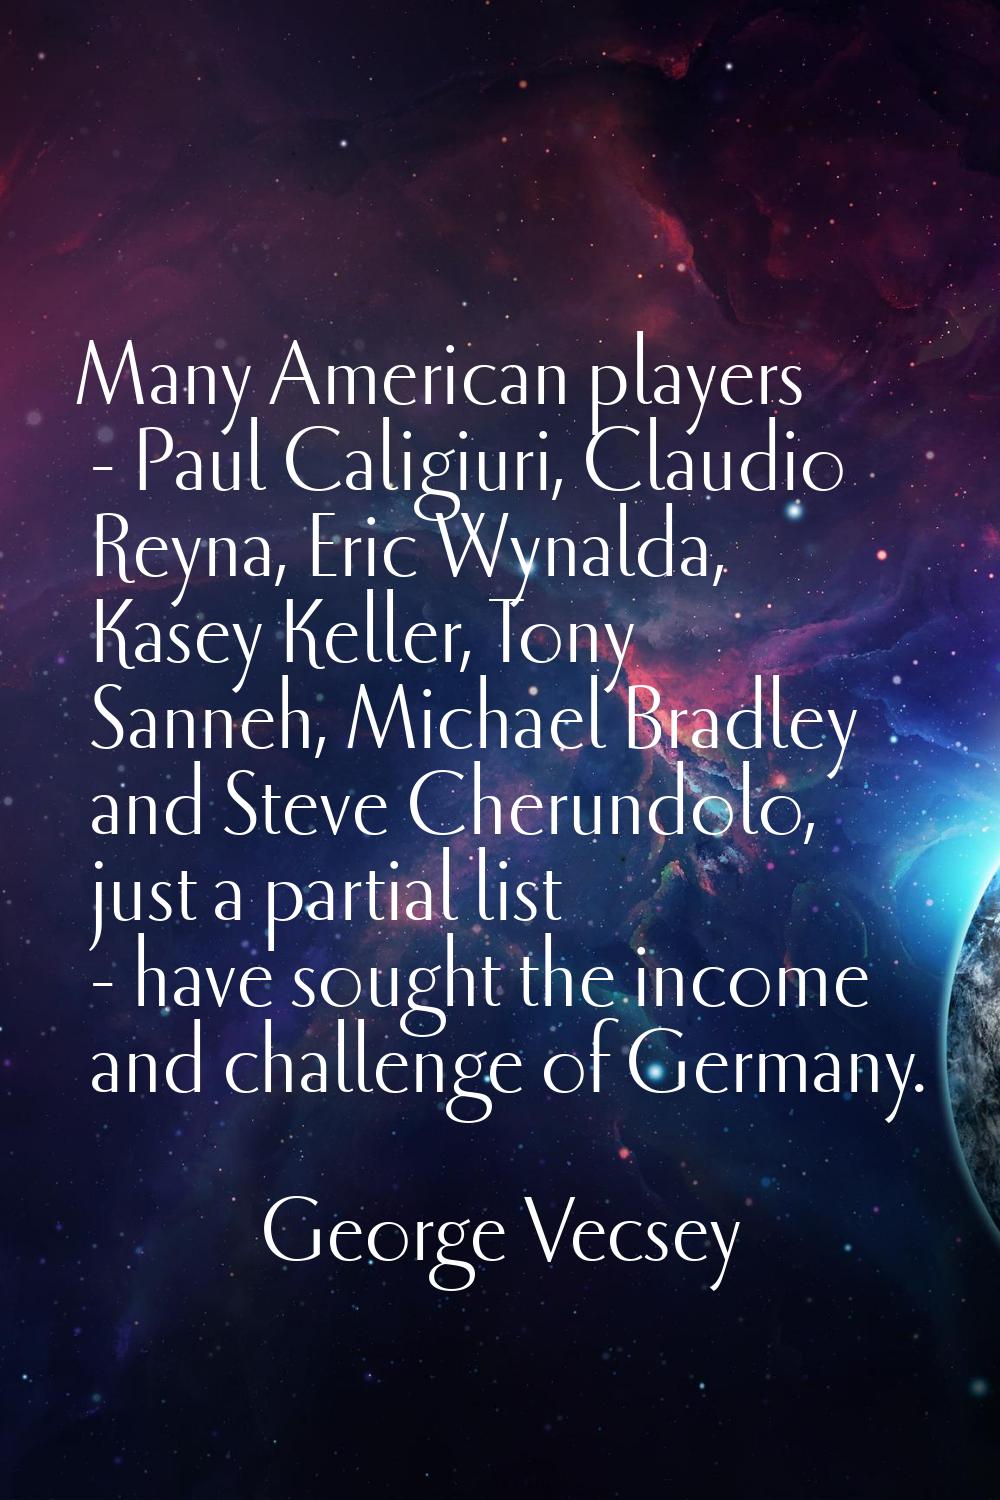 Many American players - Paul Caligiuri, Claudio Reyna, Eric Wynalda, Kasey Keller, Tony Sanneh, Mic